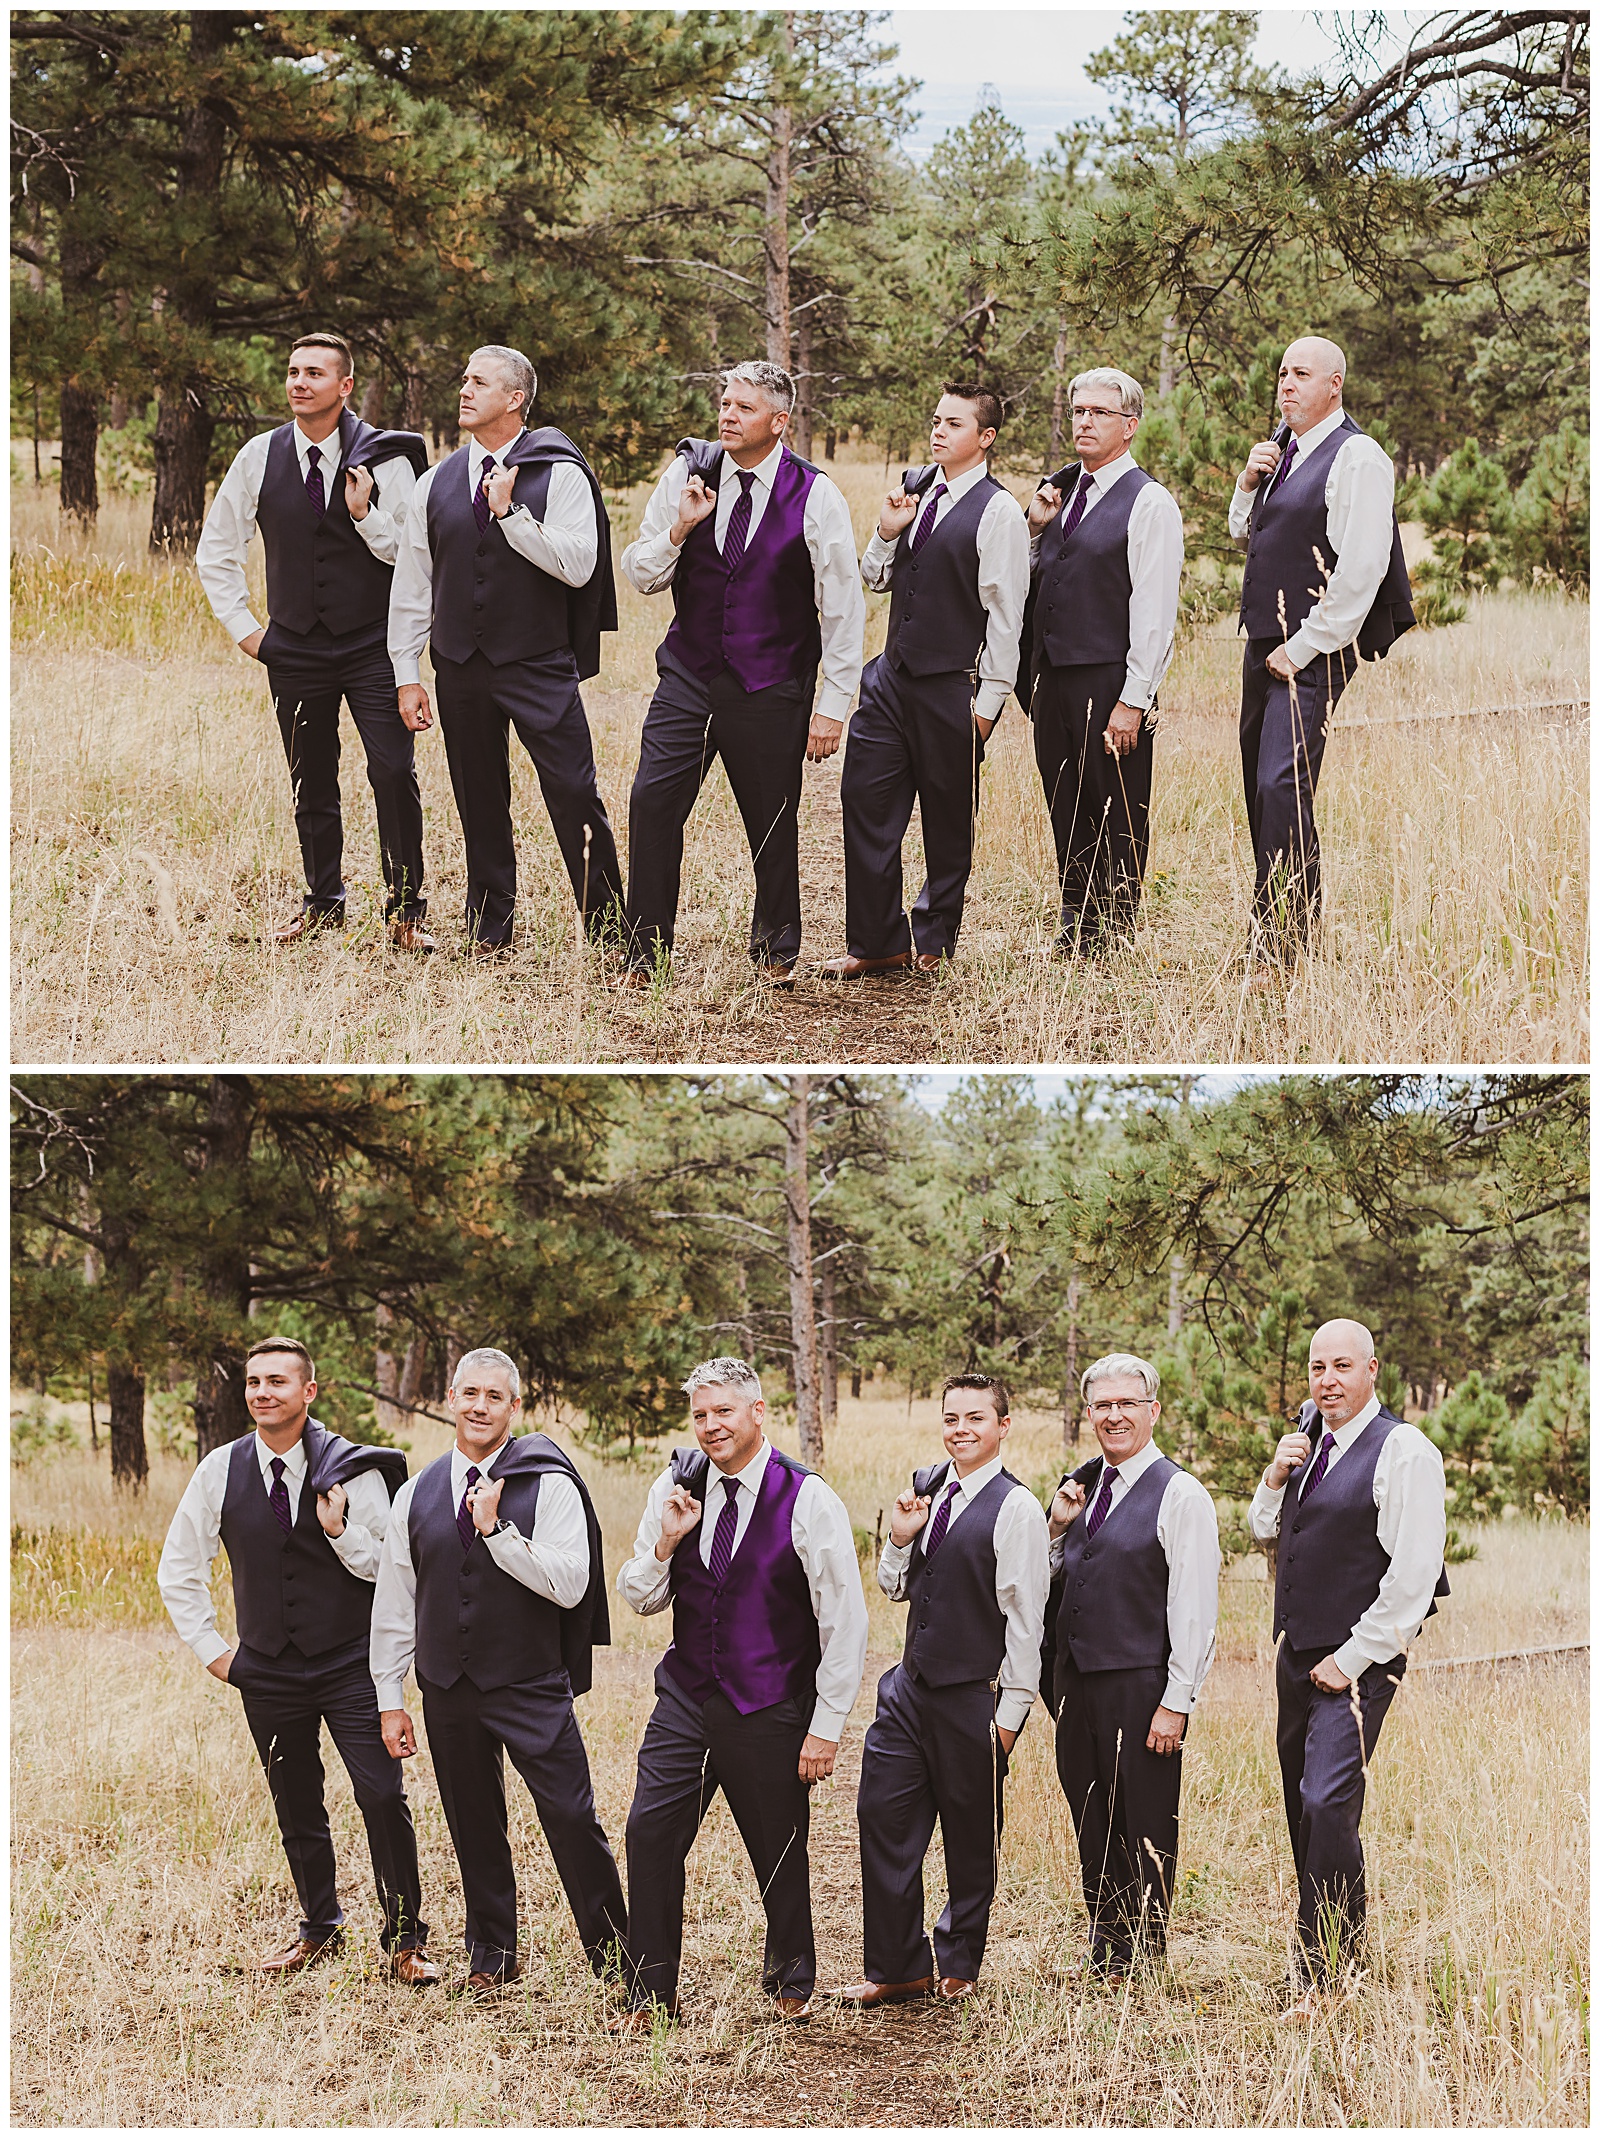 groom and groomsmen with purple vests